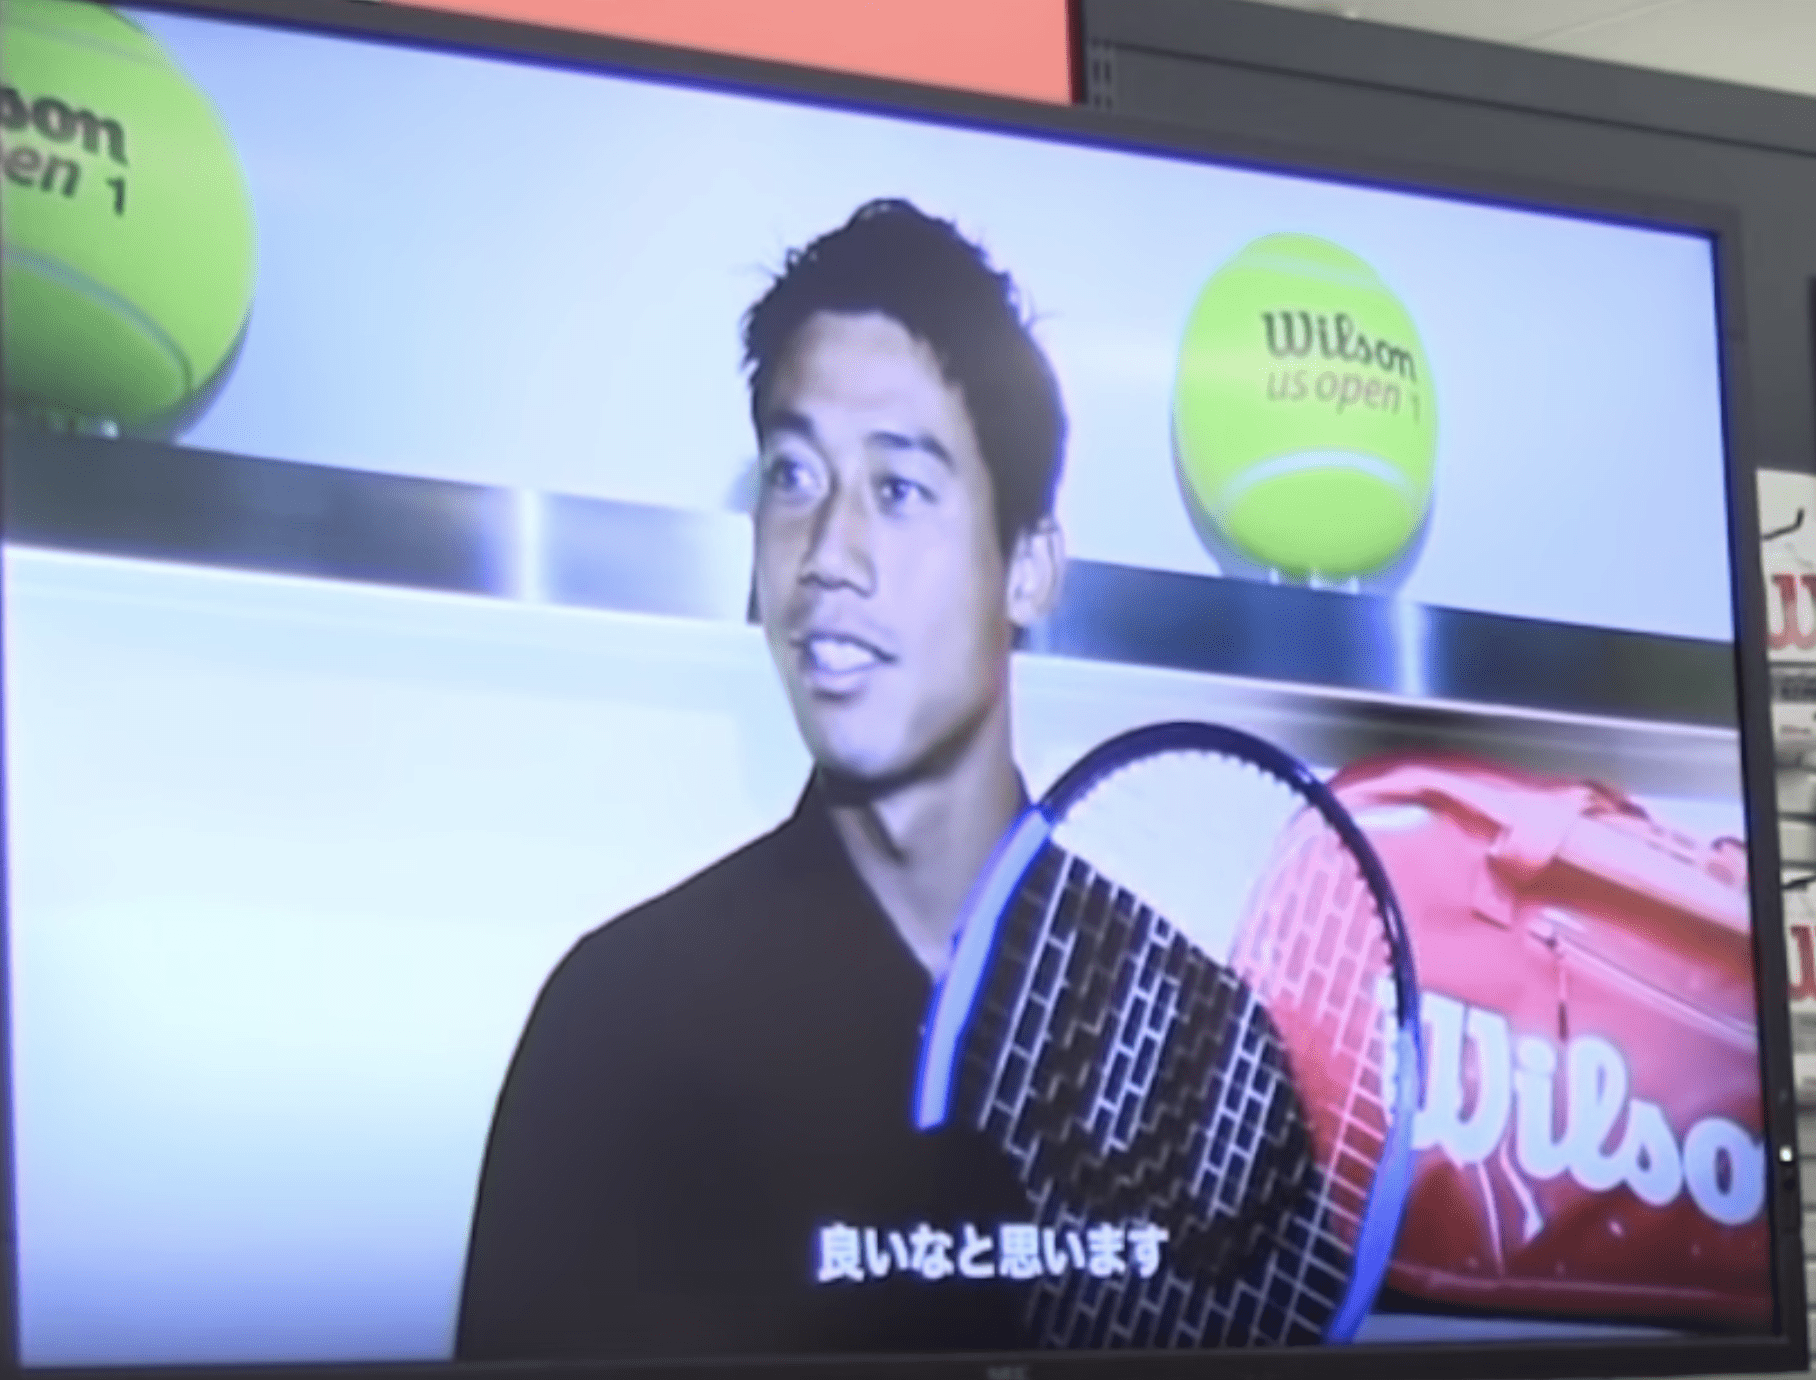 Wilson Ultra Tour CV 95- Nishikori's new racquet